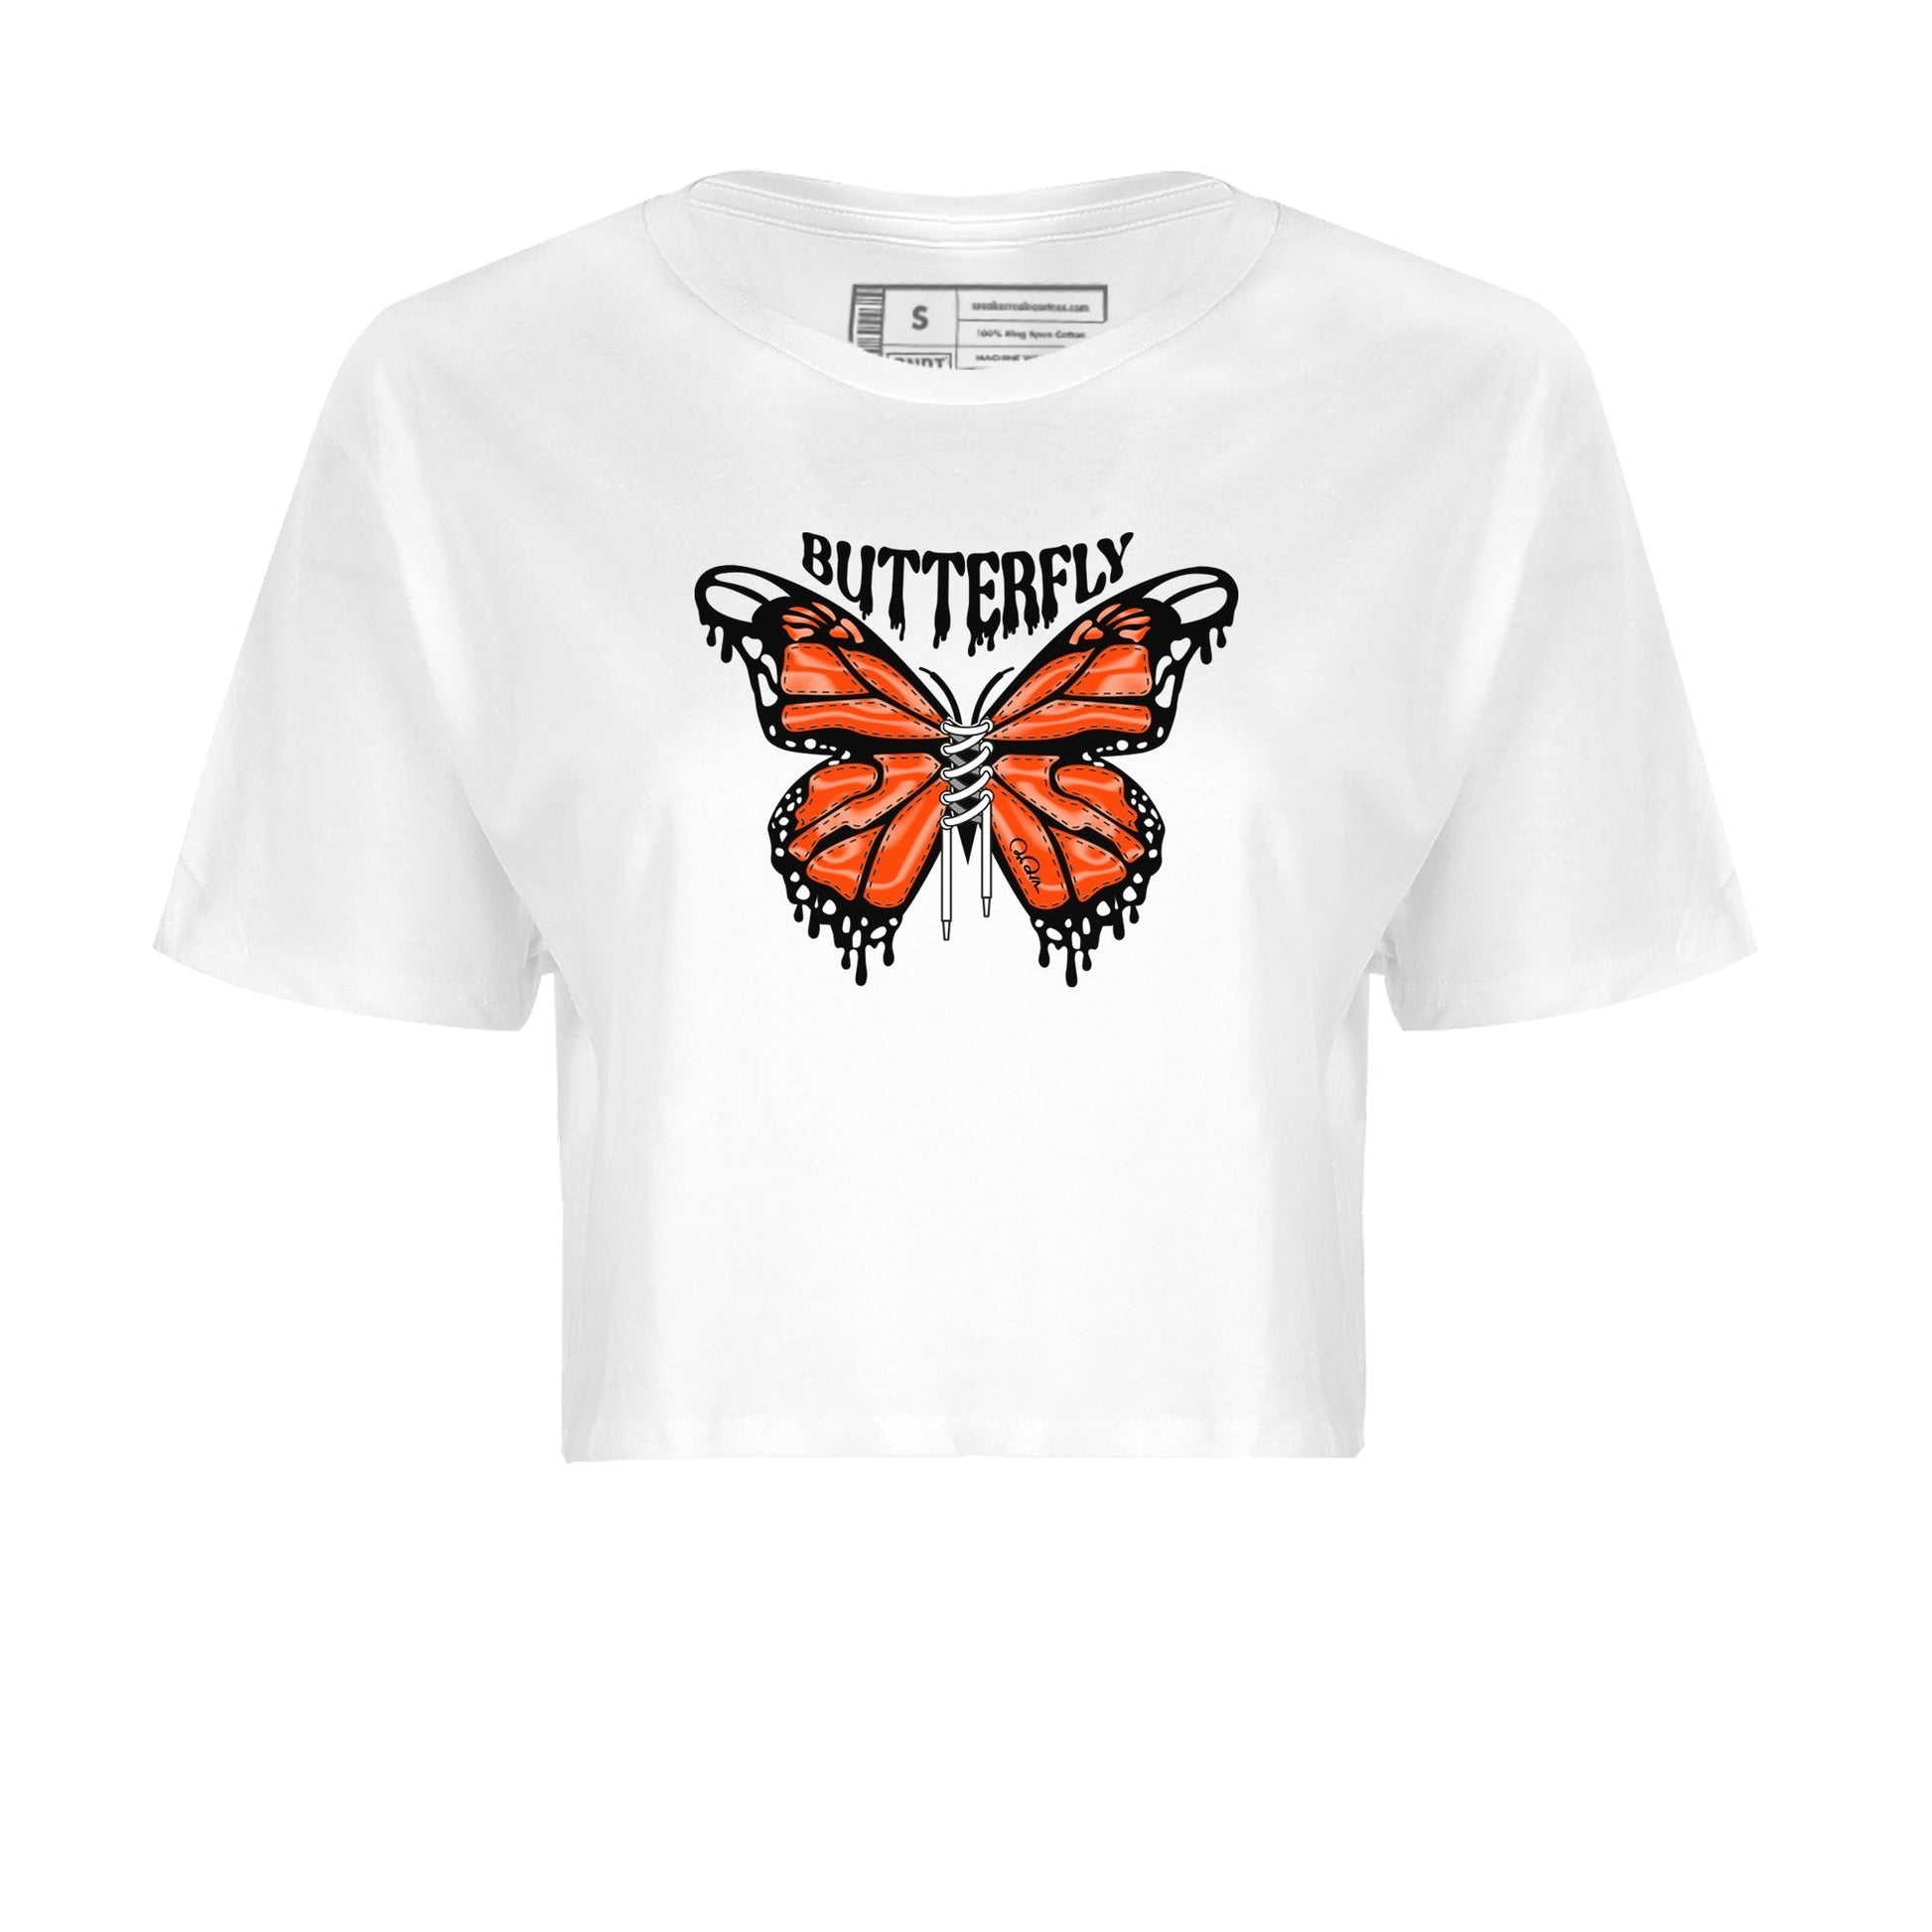 Air Jordan 12 Brilliant Orange Sneaker Match Tees Butterfly Sneaker Tees AJ12 Brilliant Orange Sneaker Release Tees Women's Shirts White 2